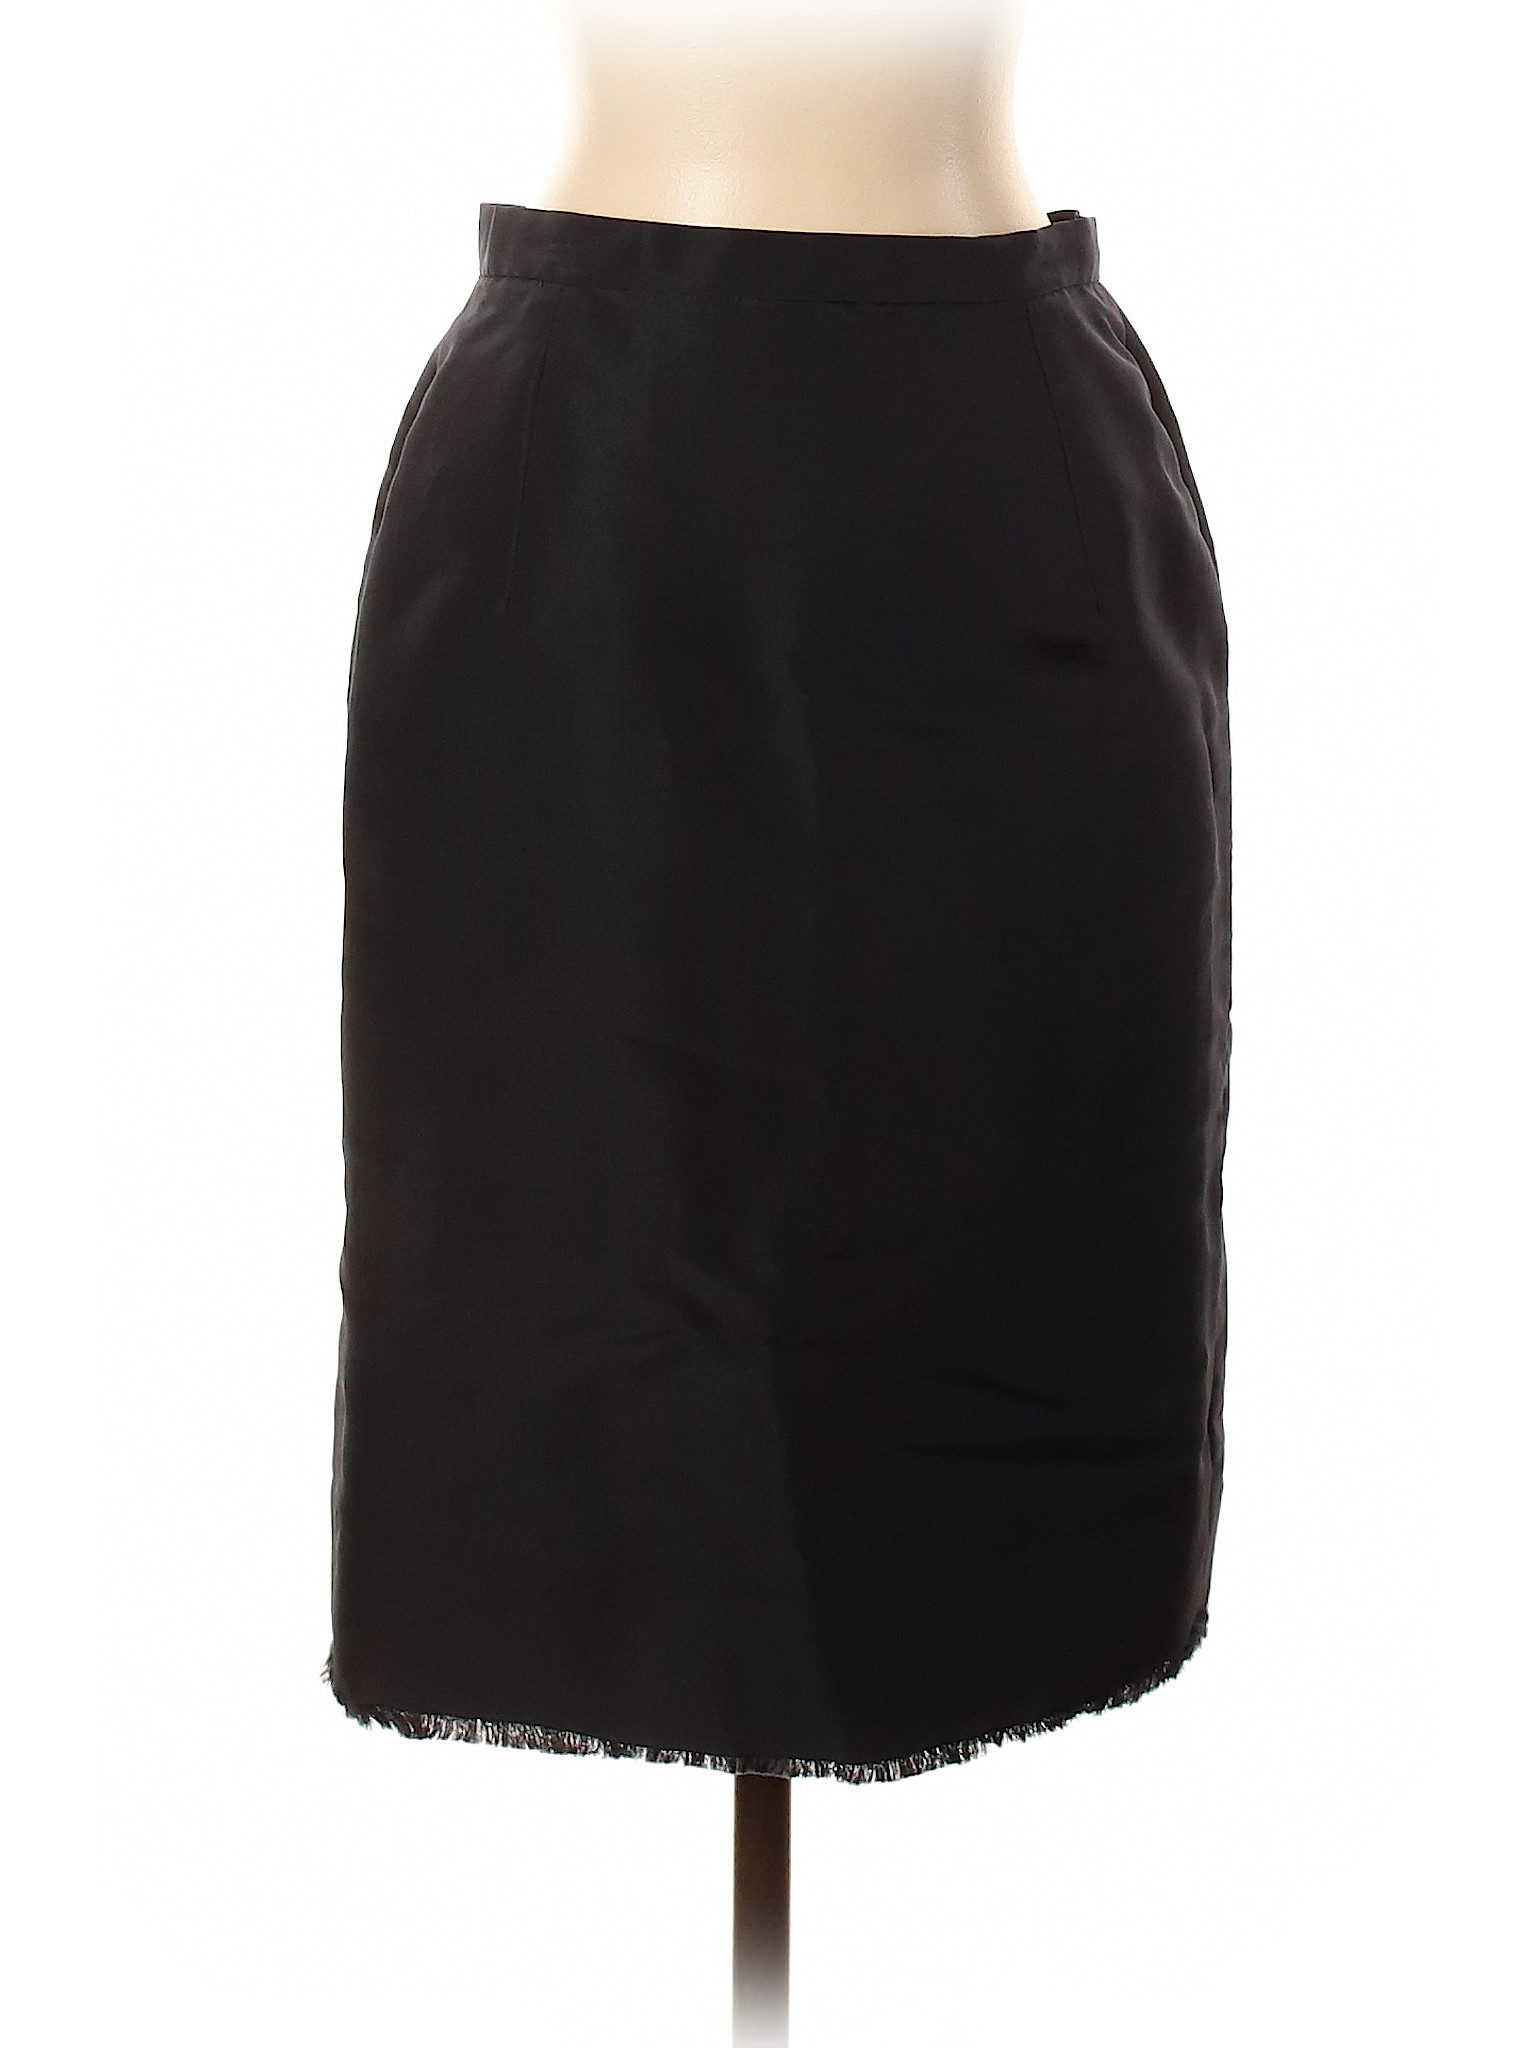 Oscar De La Renta Women Black Silk Skirt 4 | eBay